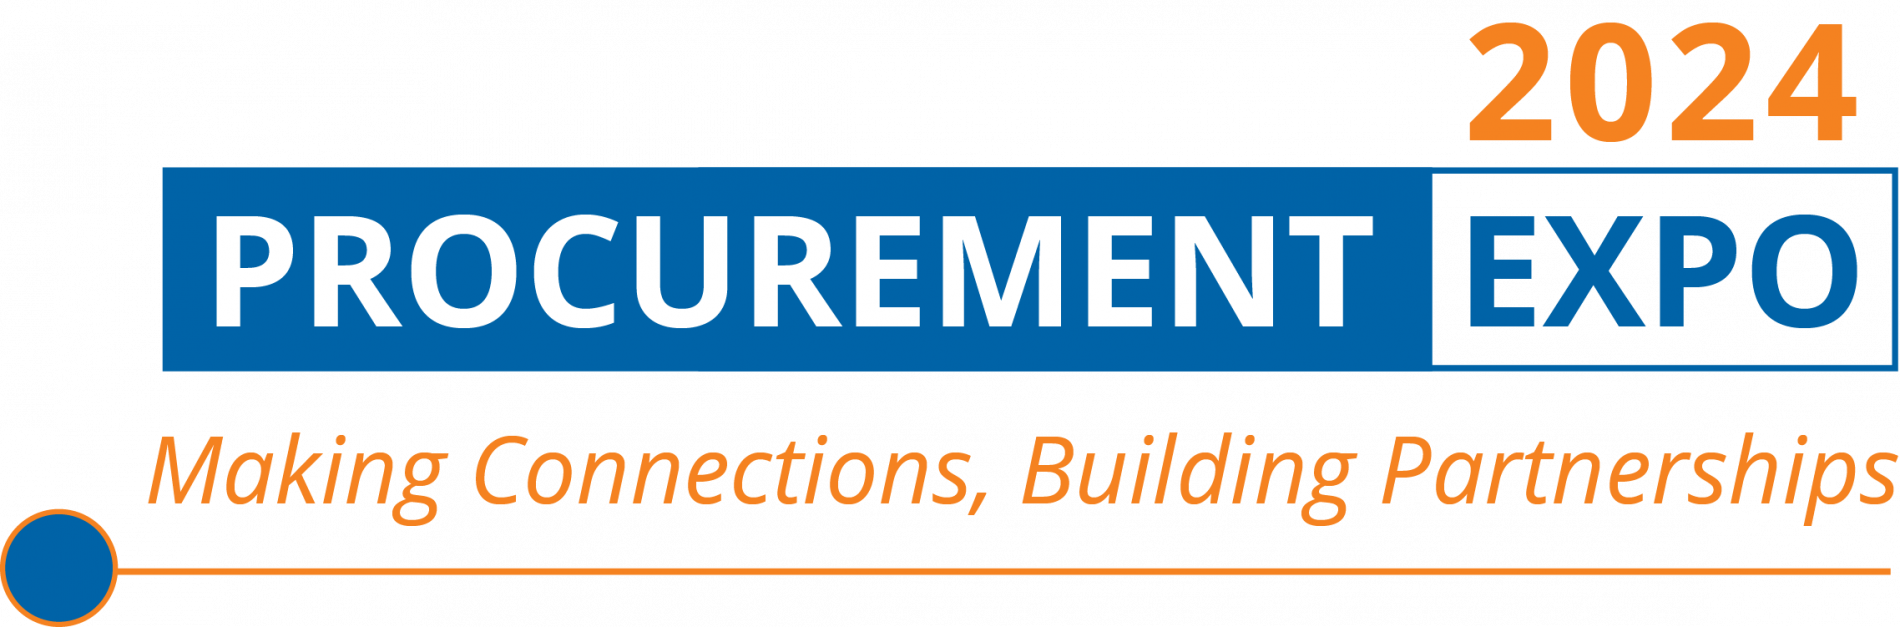 Event Logo: 2024 Procurement Expo Making Connections, Building Partnerships